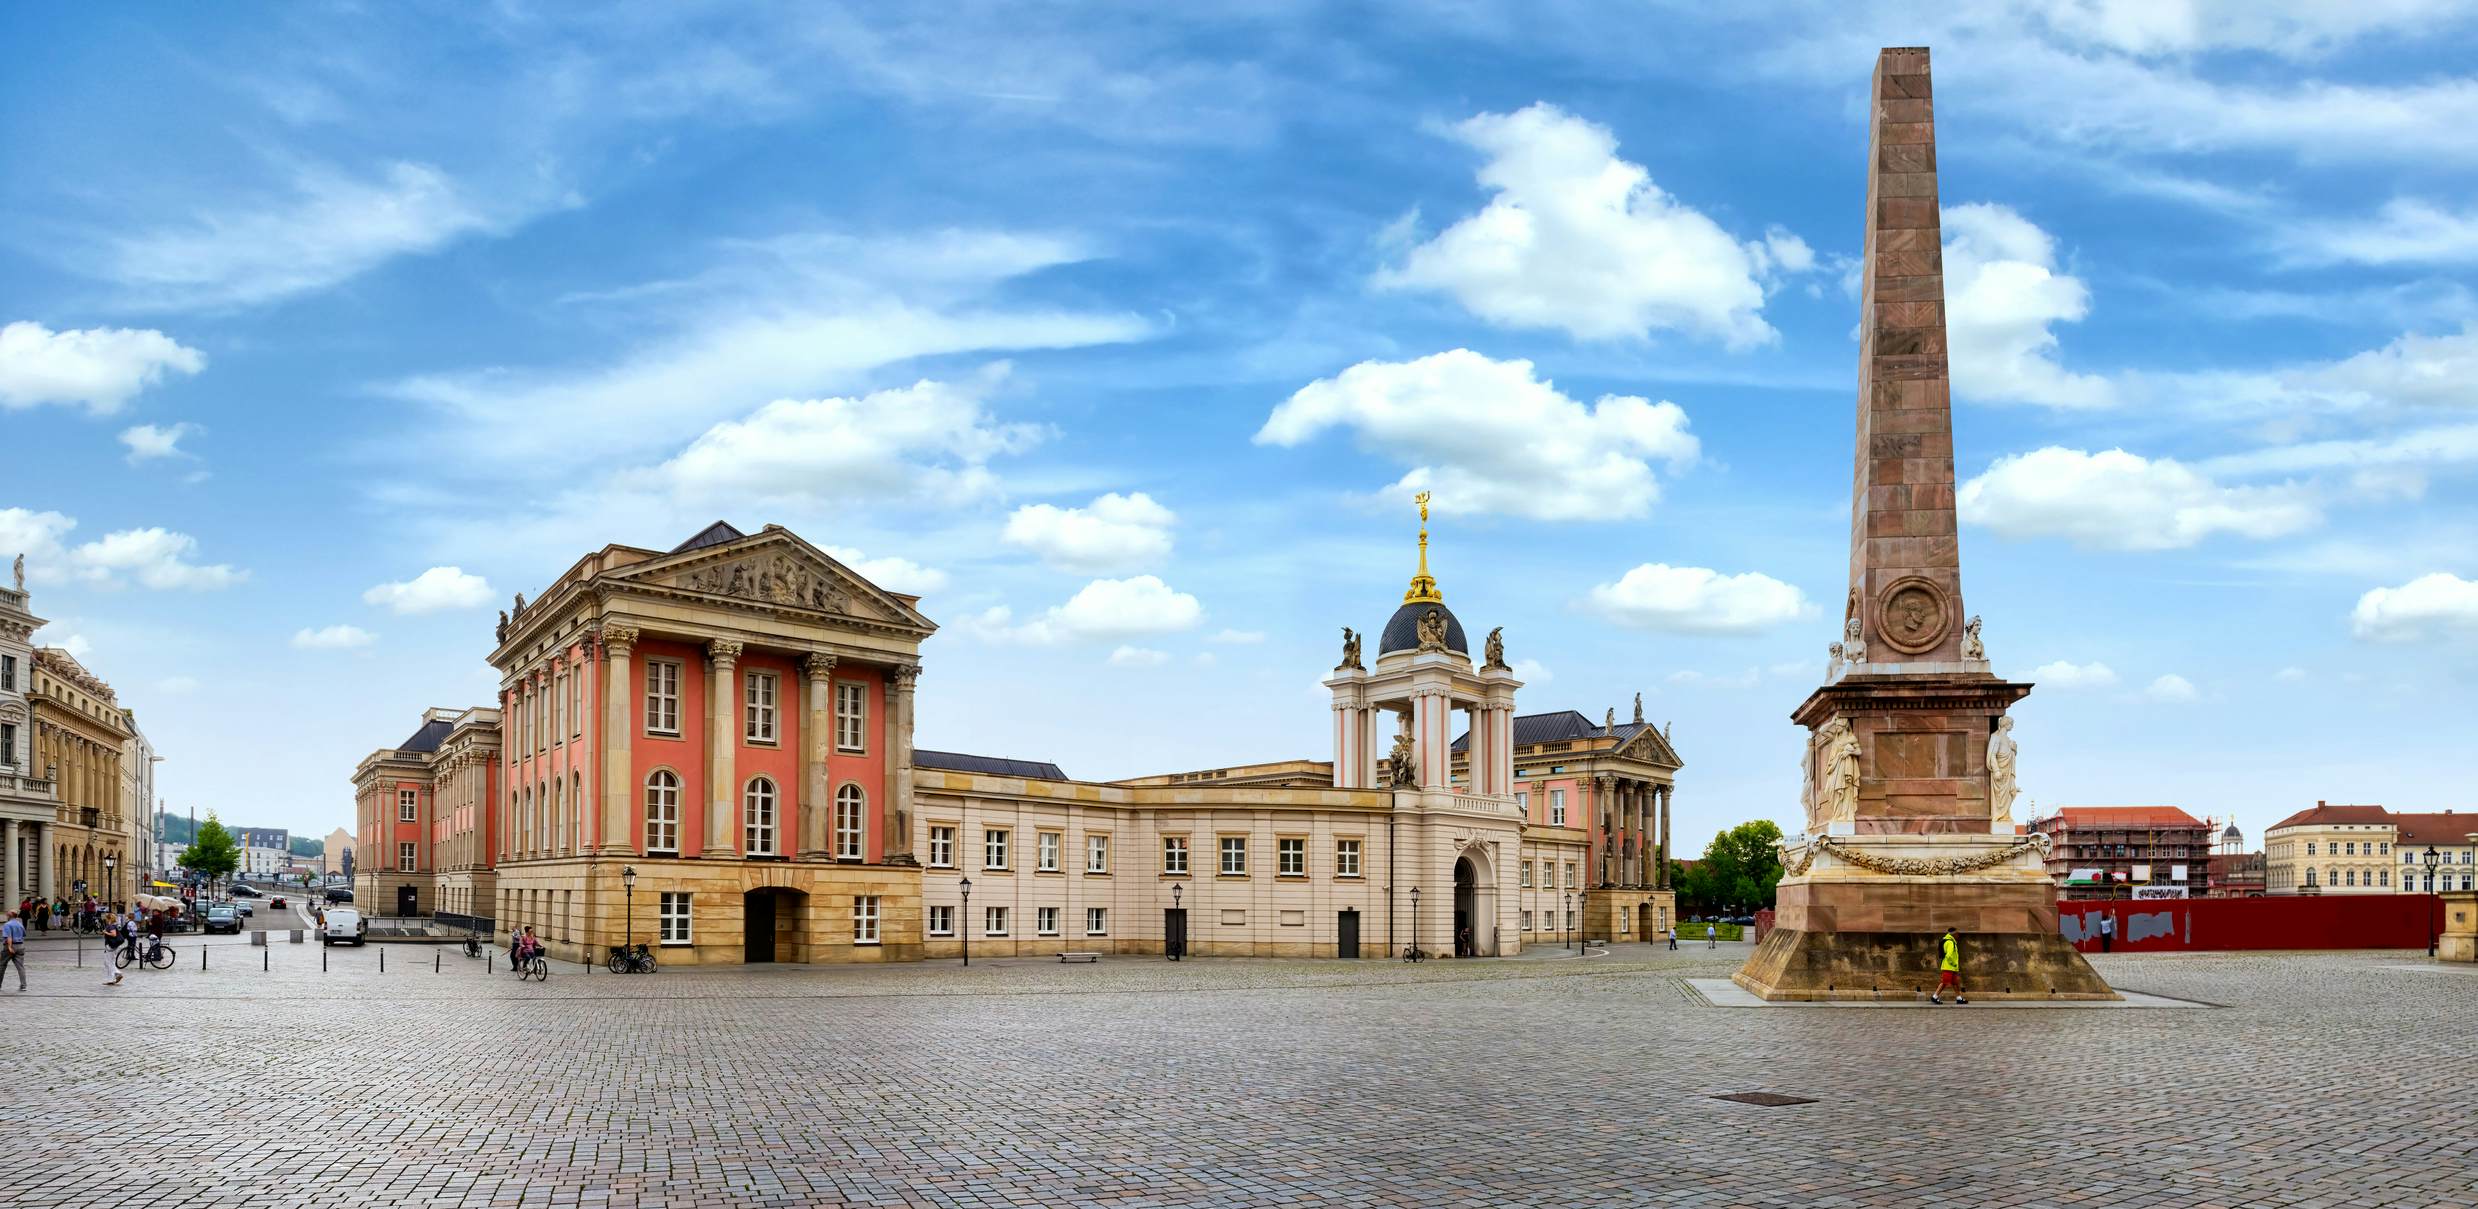 Potsdam image